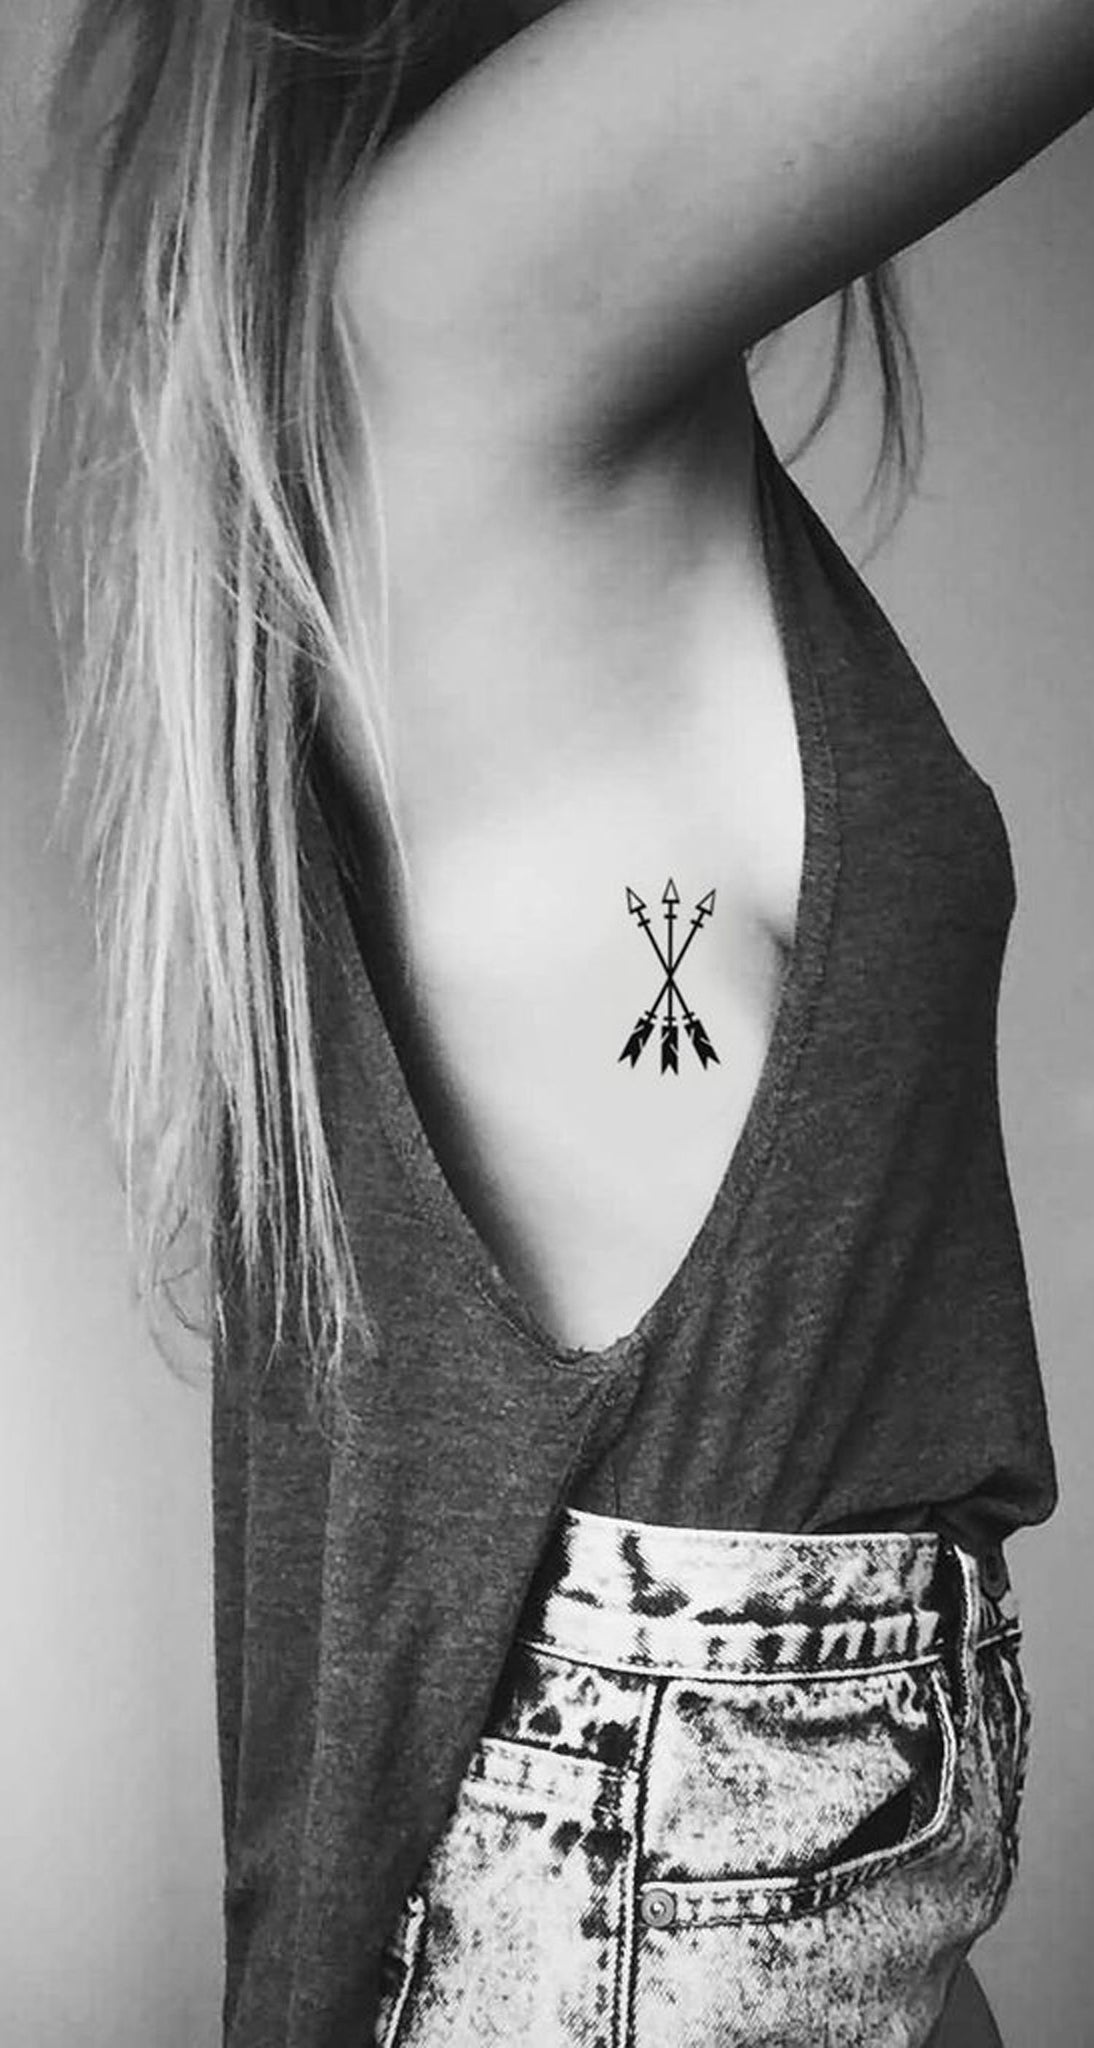 Meaningful Small Arrow Rib Tattoo Ideas for Women -  ideas tribales del tatuaje para chicas - www.MyBodiArt.com 